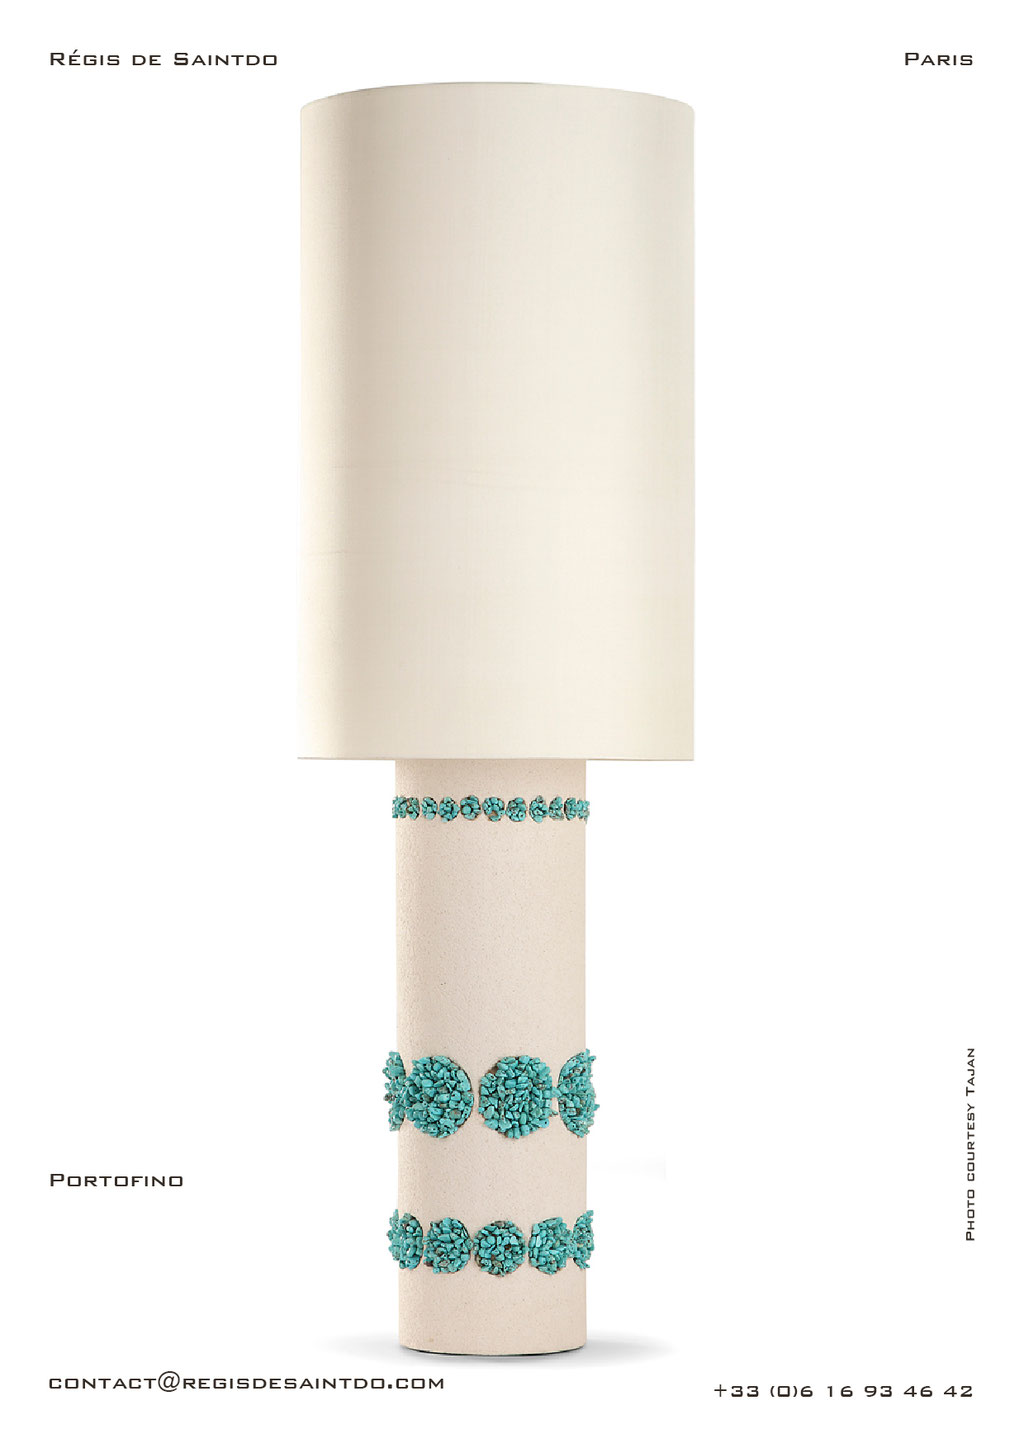 Lampe Portofino céramique blanche, howlites turquoise, faite main